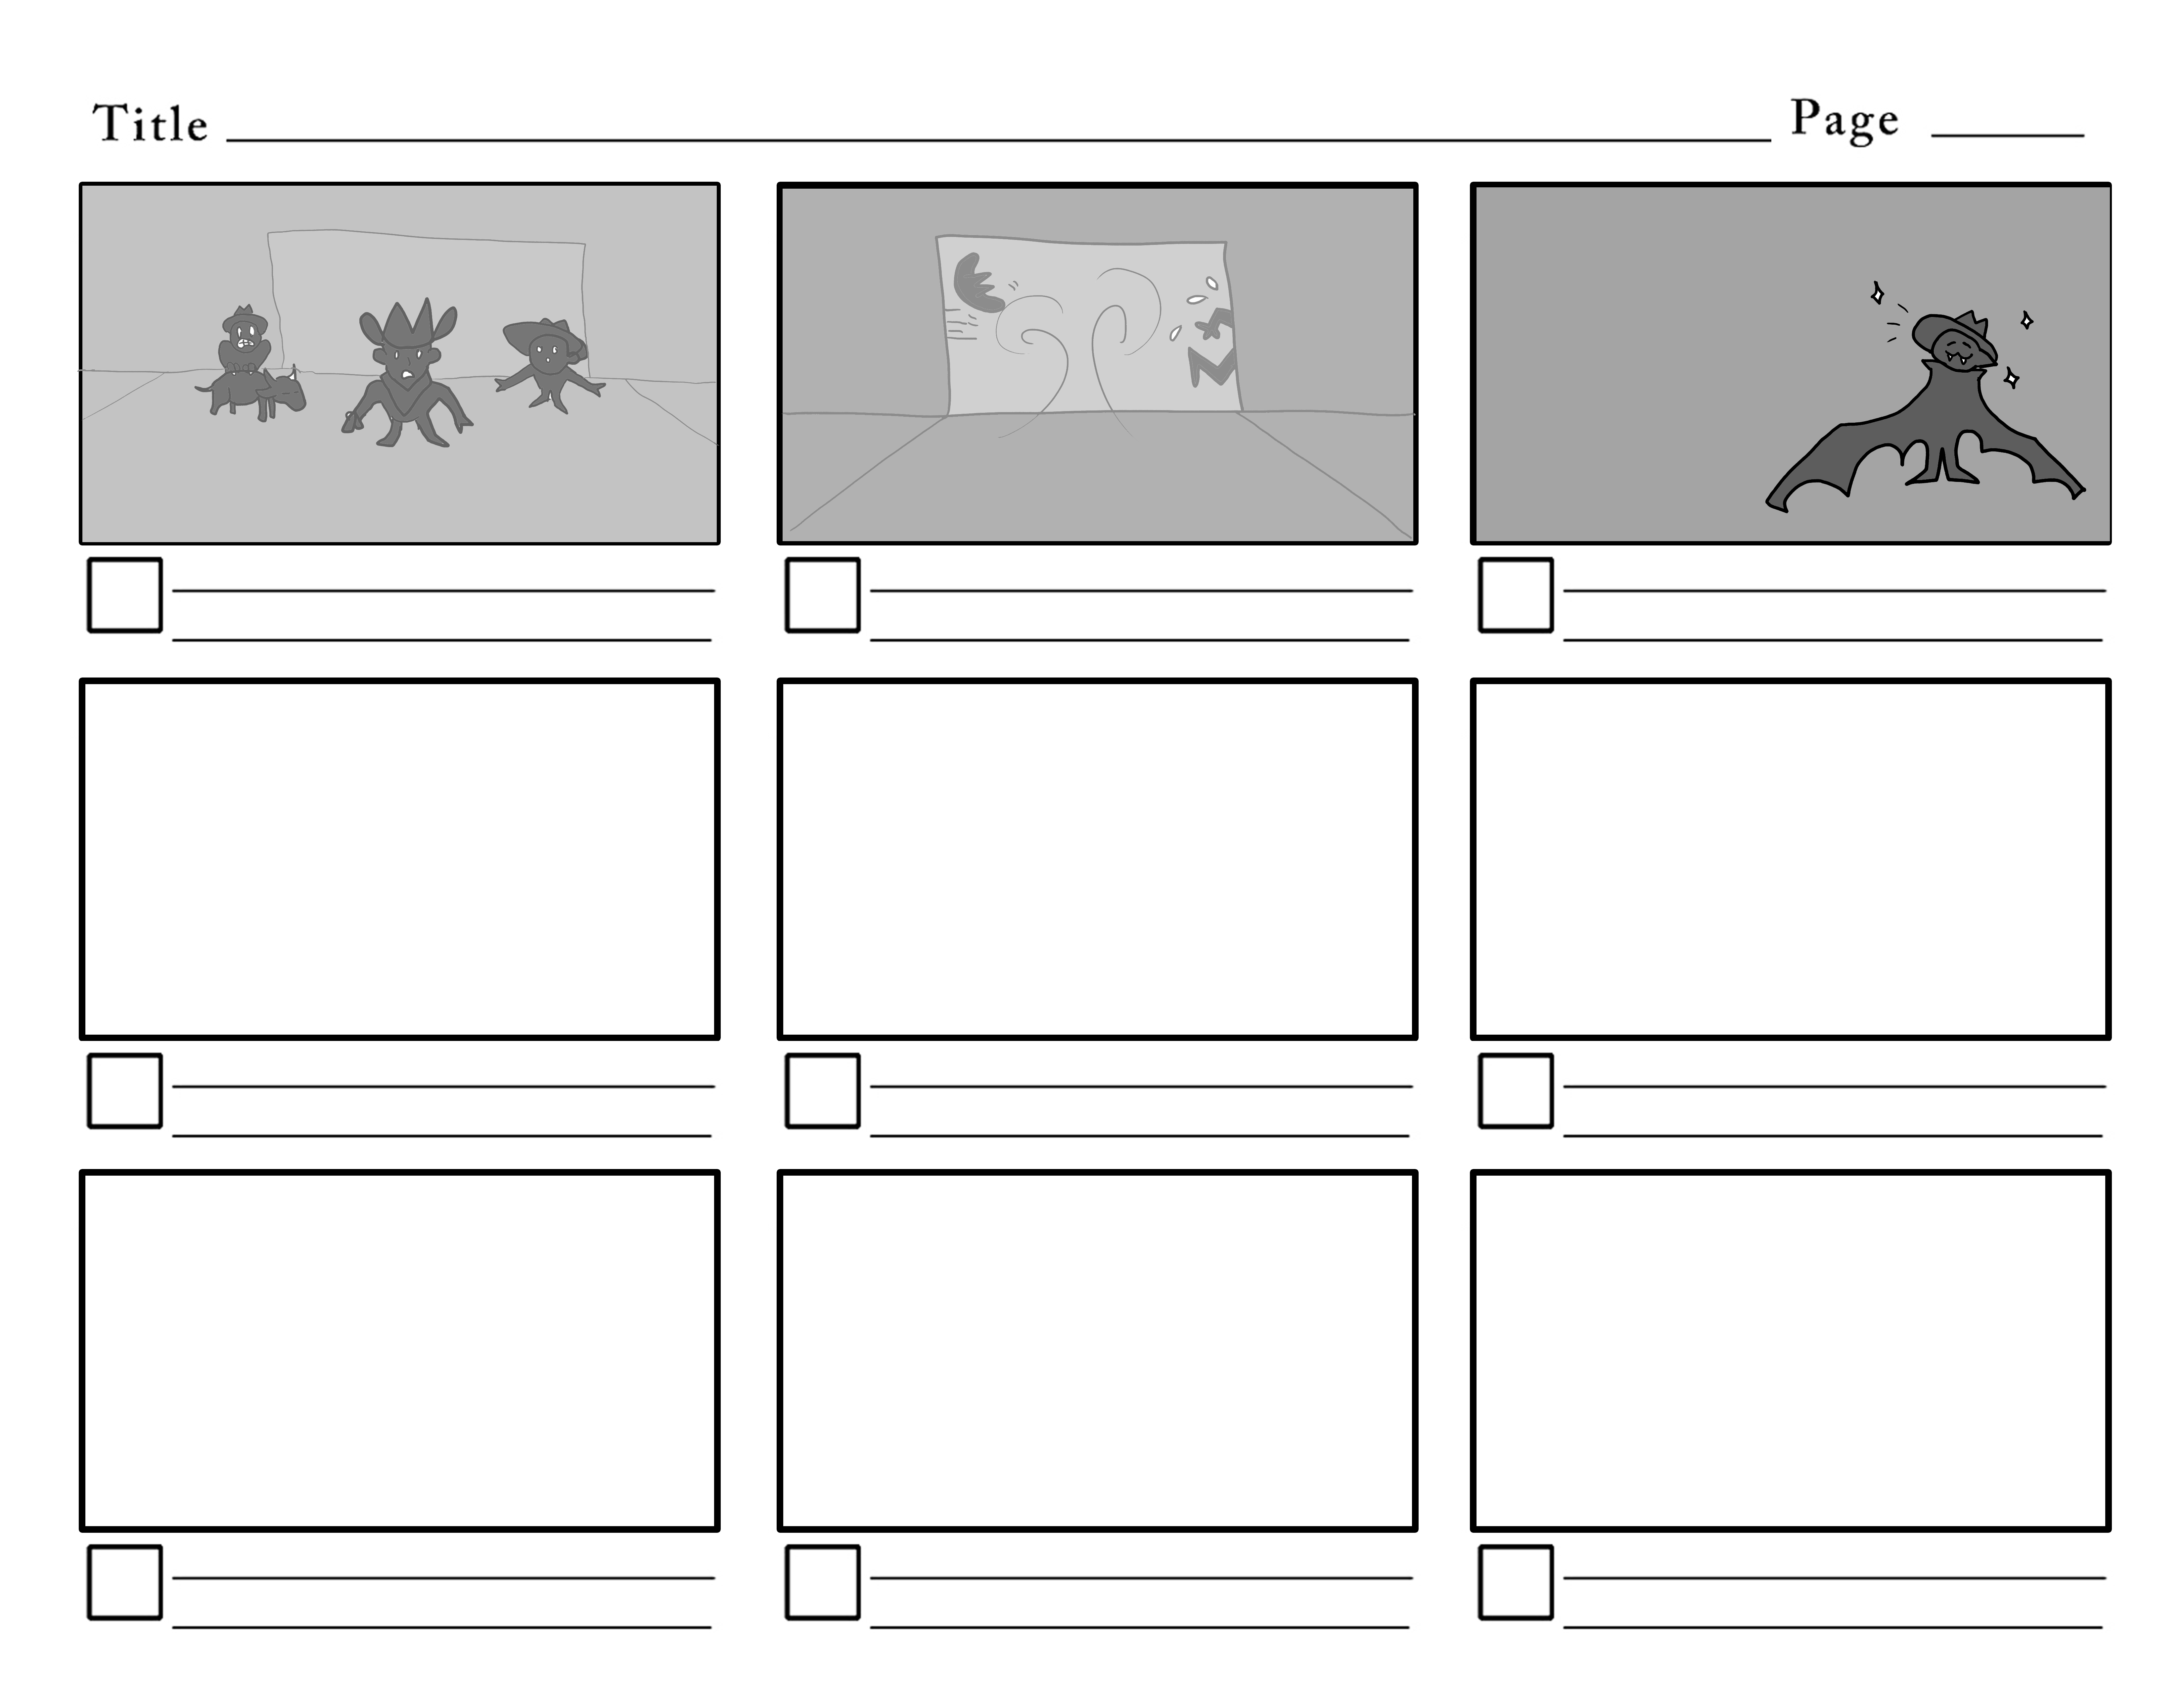 Vampire Cowboy - Script & Storyboard Final (Page 3) - Storyboard